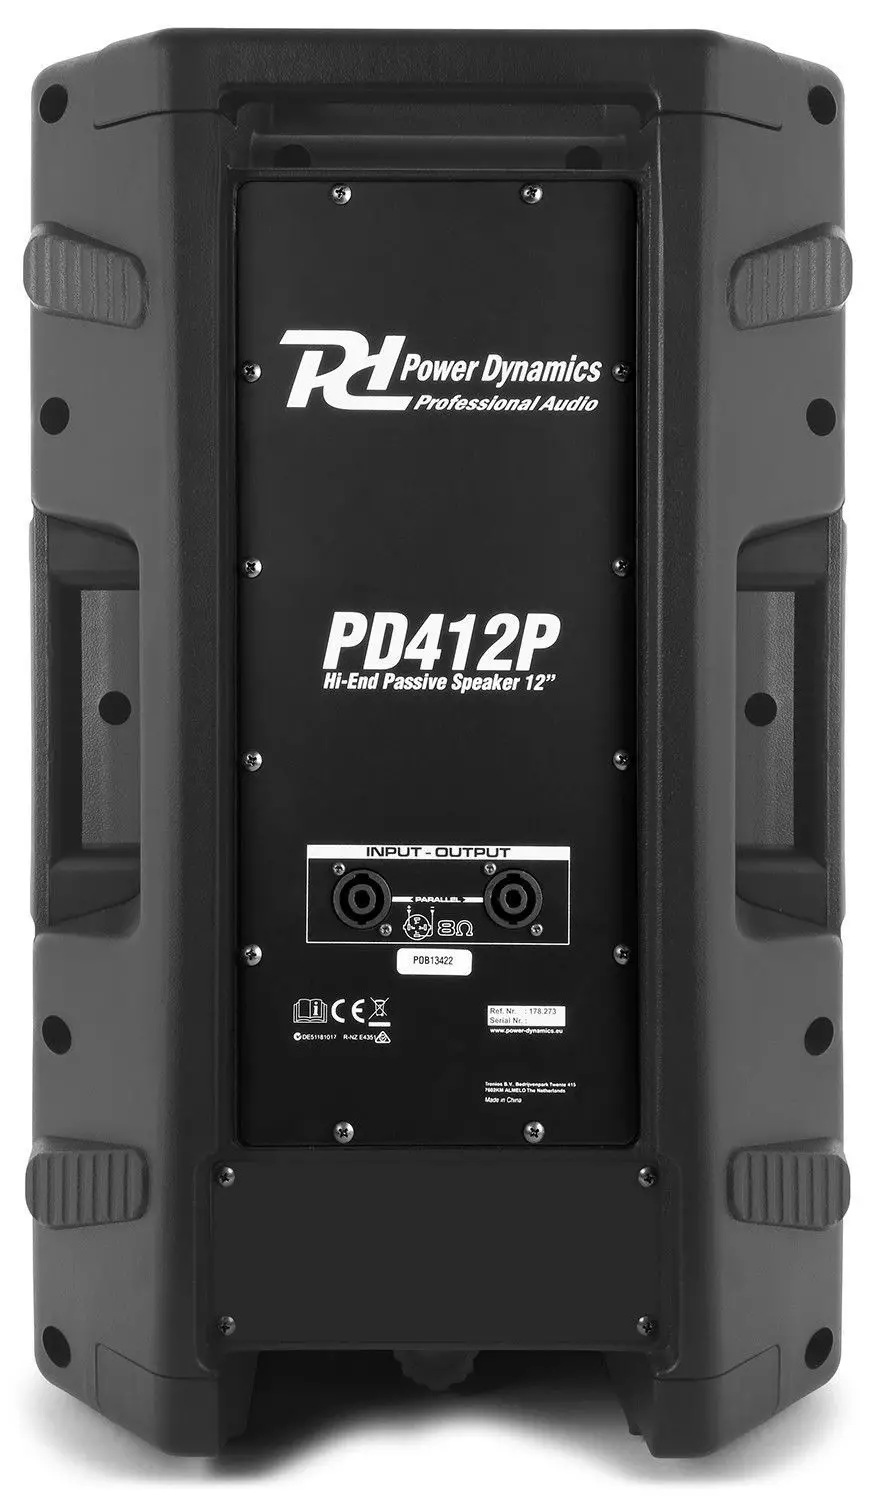 Retourdeal power dynamics pd412p 12 passieve 2 weg speaker 1200w 7